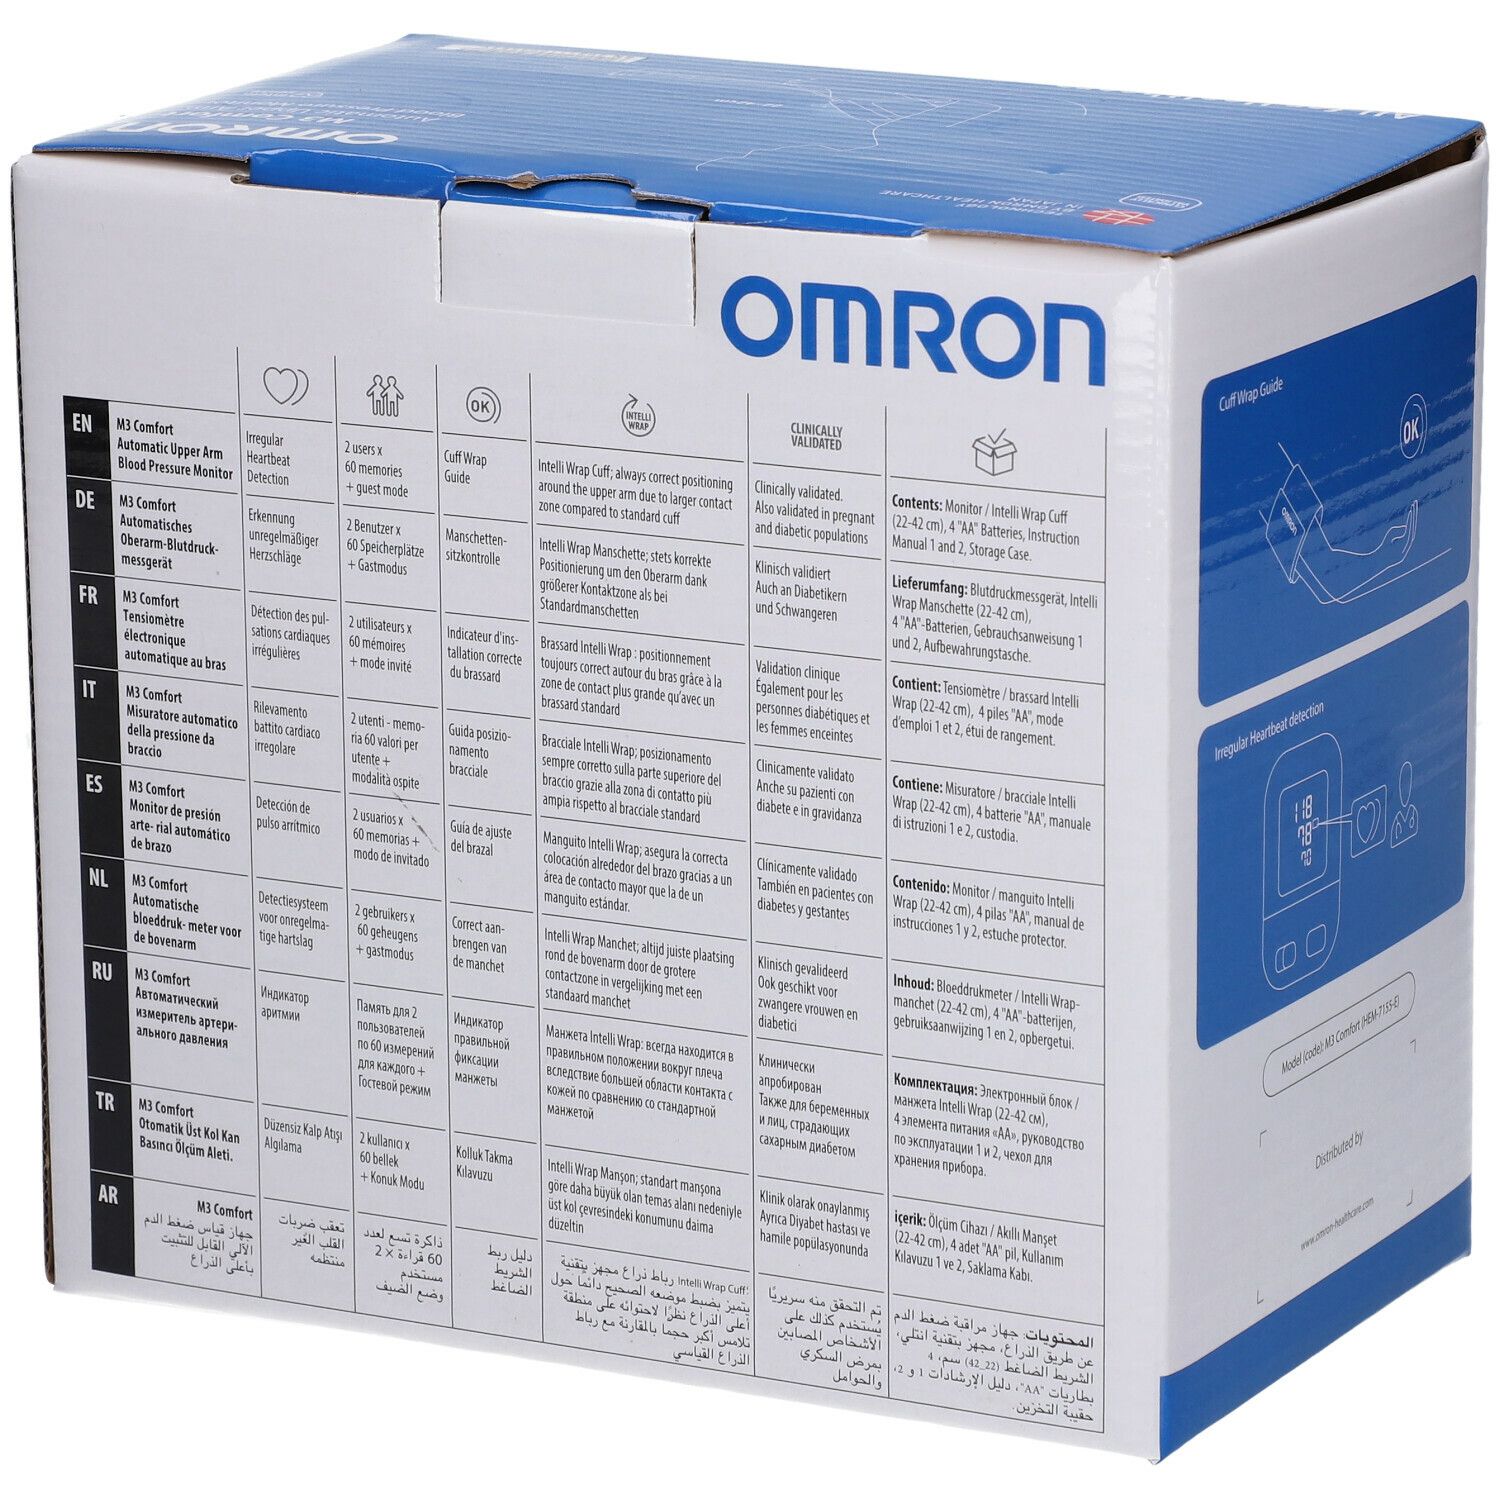 Omron M3 Comfort